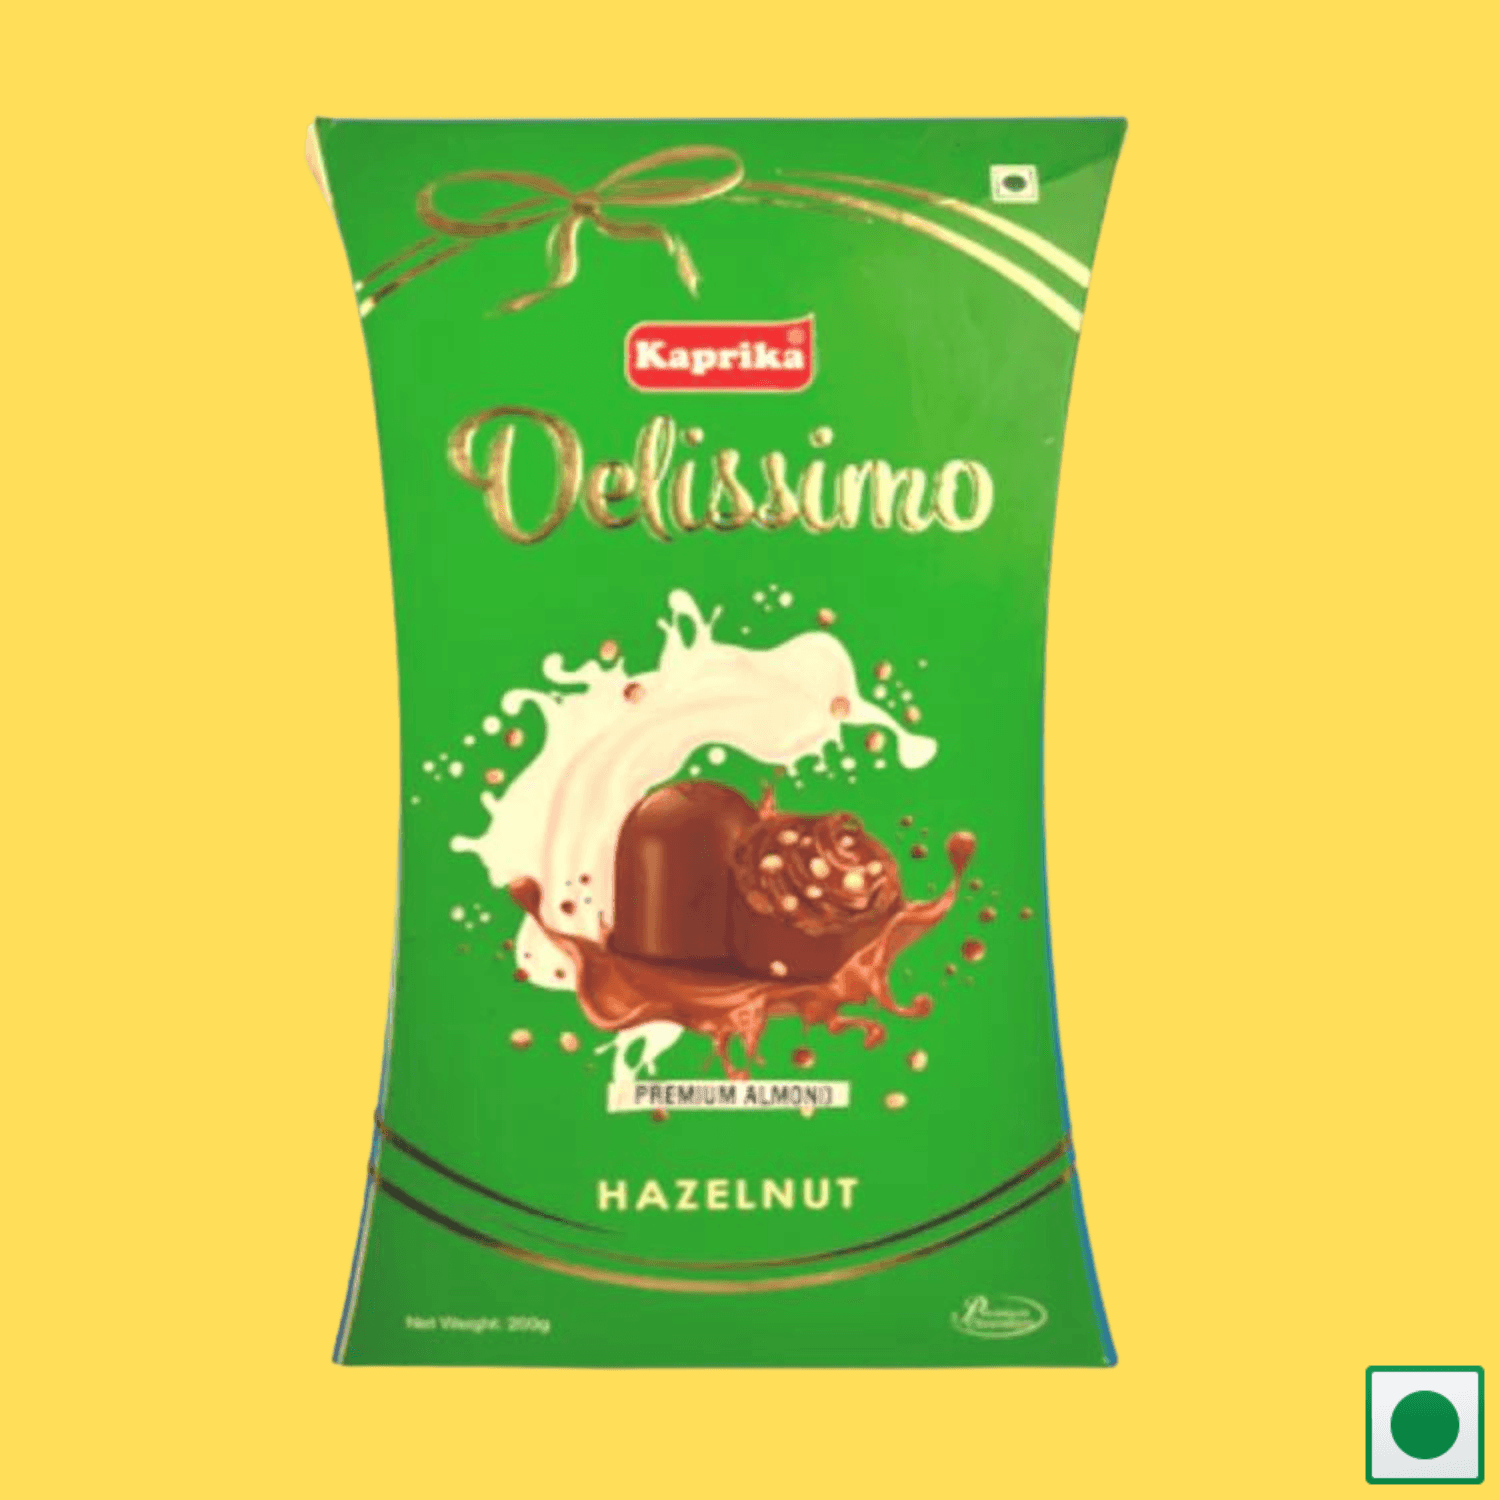 Kaprika Delissimo Premium Hazelnut Chocolate with Almond Crumbs, 200g - Super 7 Mart